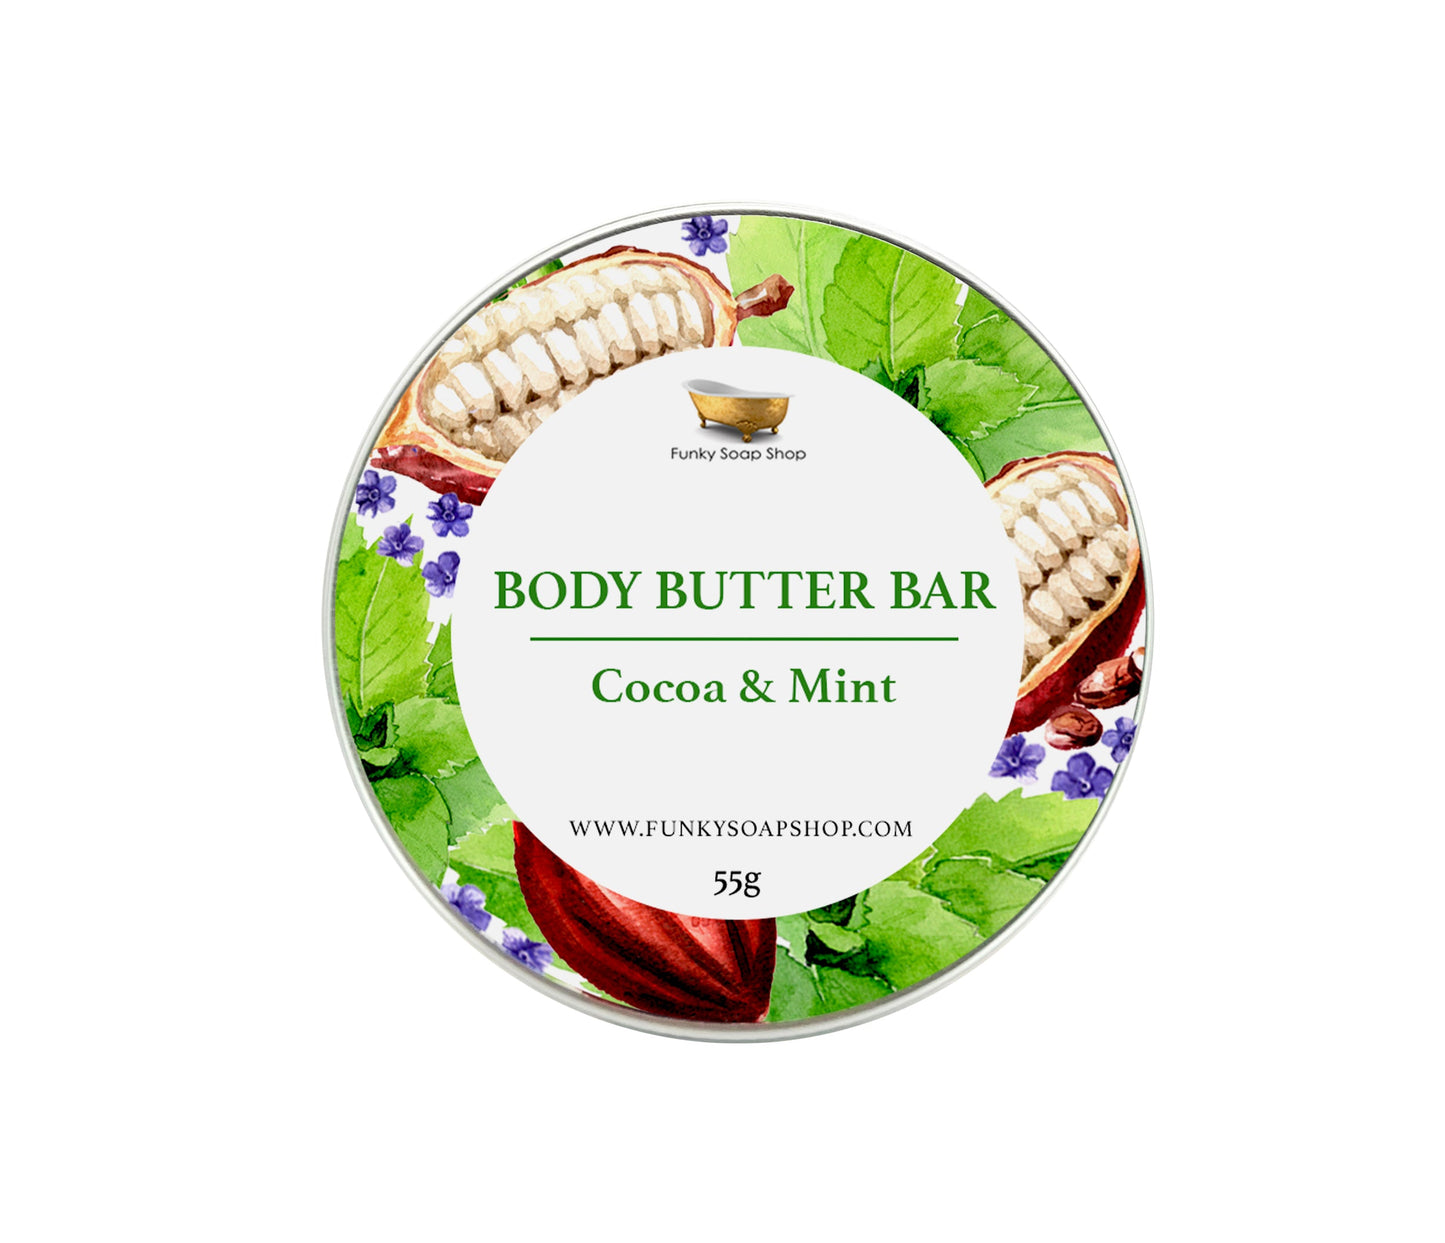 Body Butter Bar - Cocoa & Mint - Funky Soap Shop